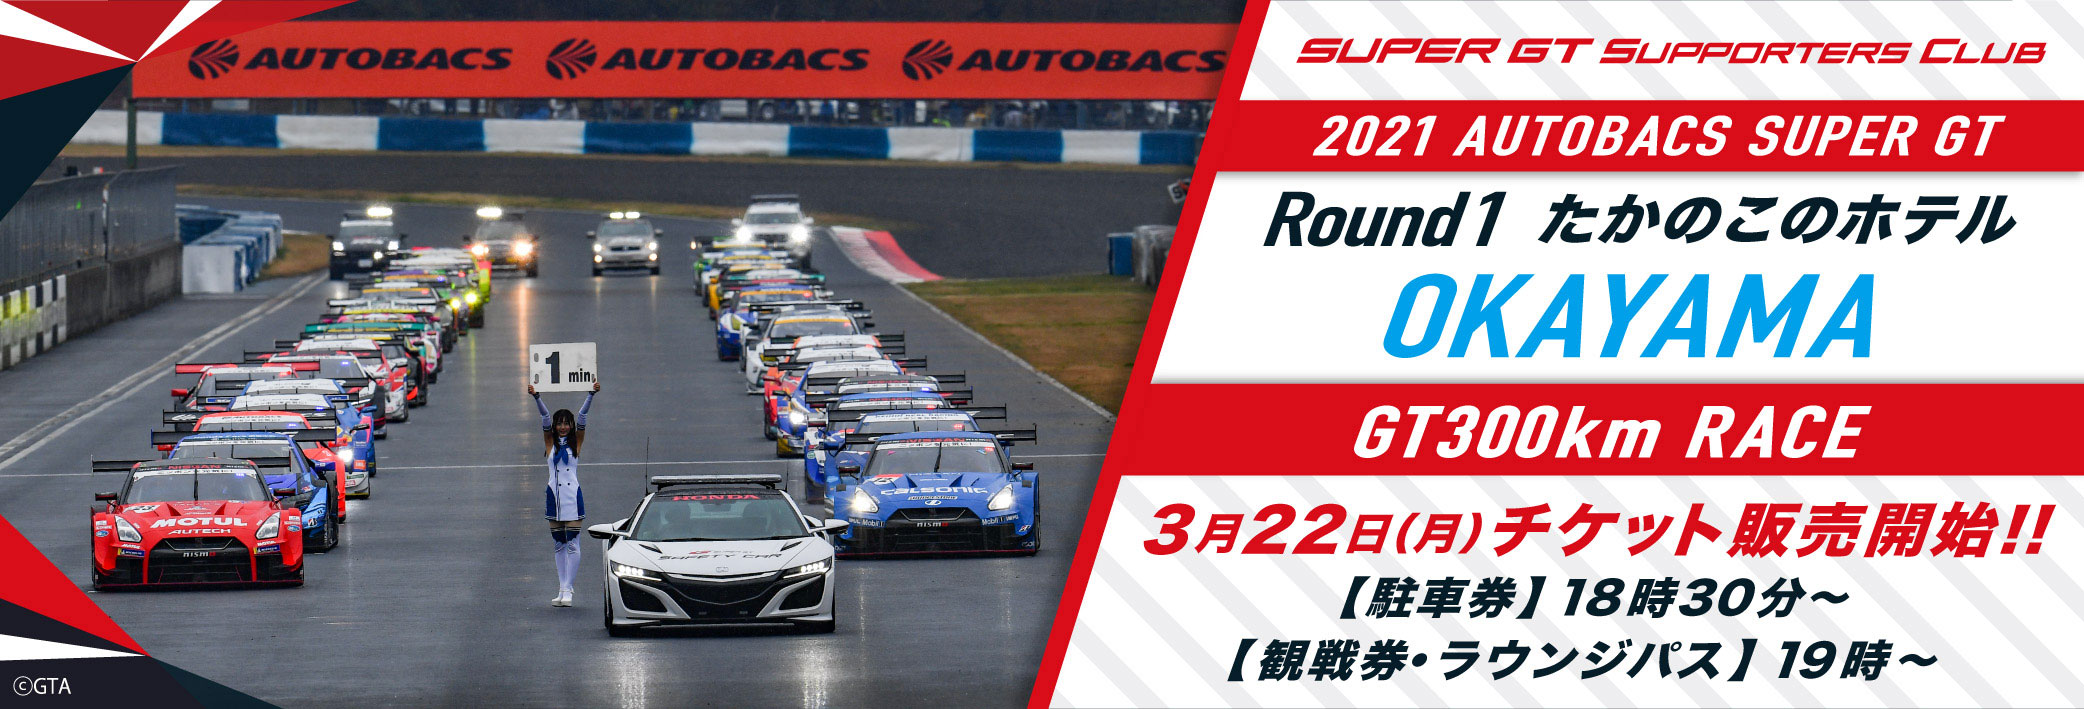 2021 AUTOBACS SUPER GT Round1 OKAYAMA GT 300km RACE チケット販売のご案内